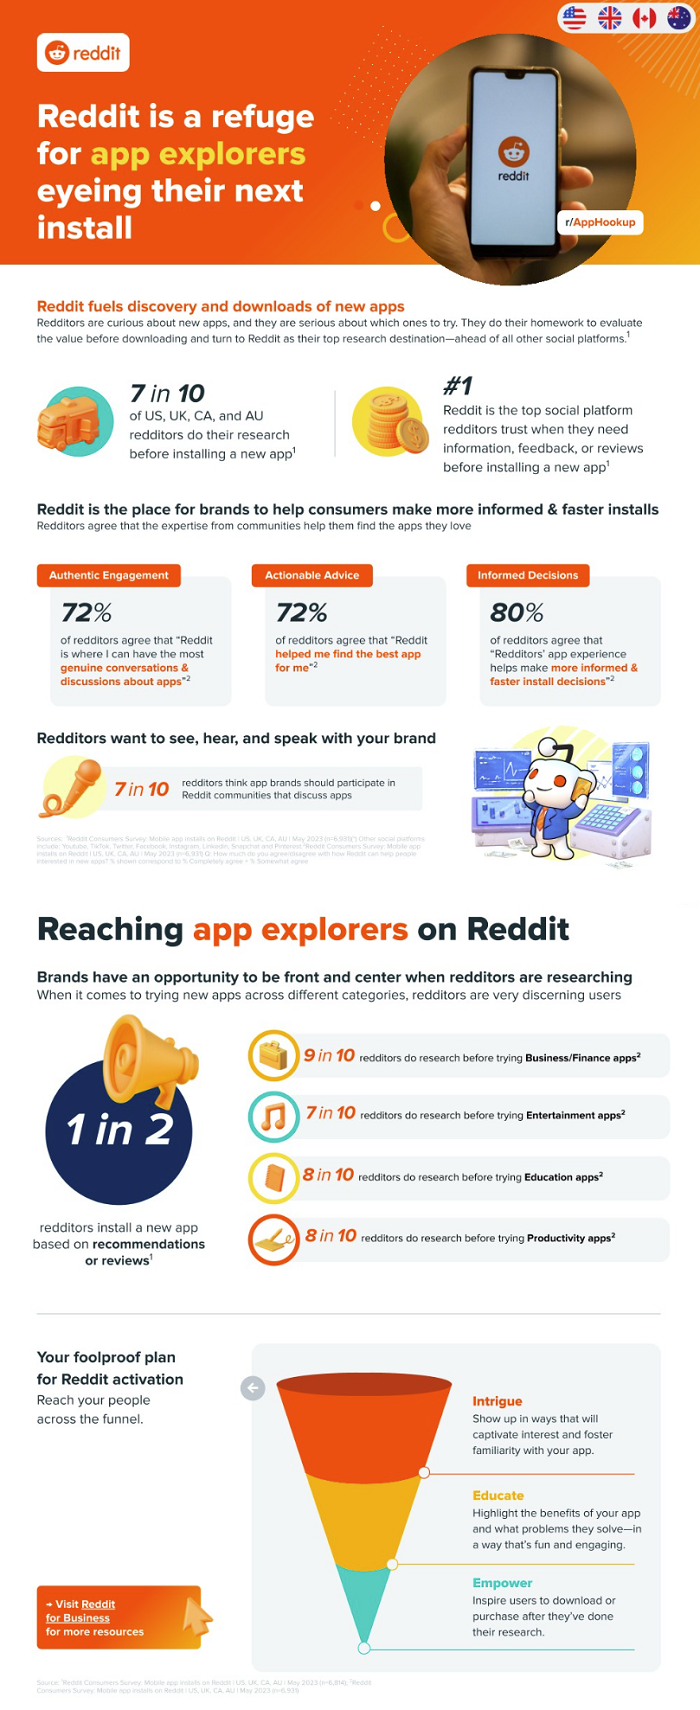 Reaching App Explorers on Reddit infographic